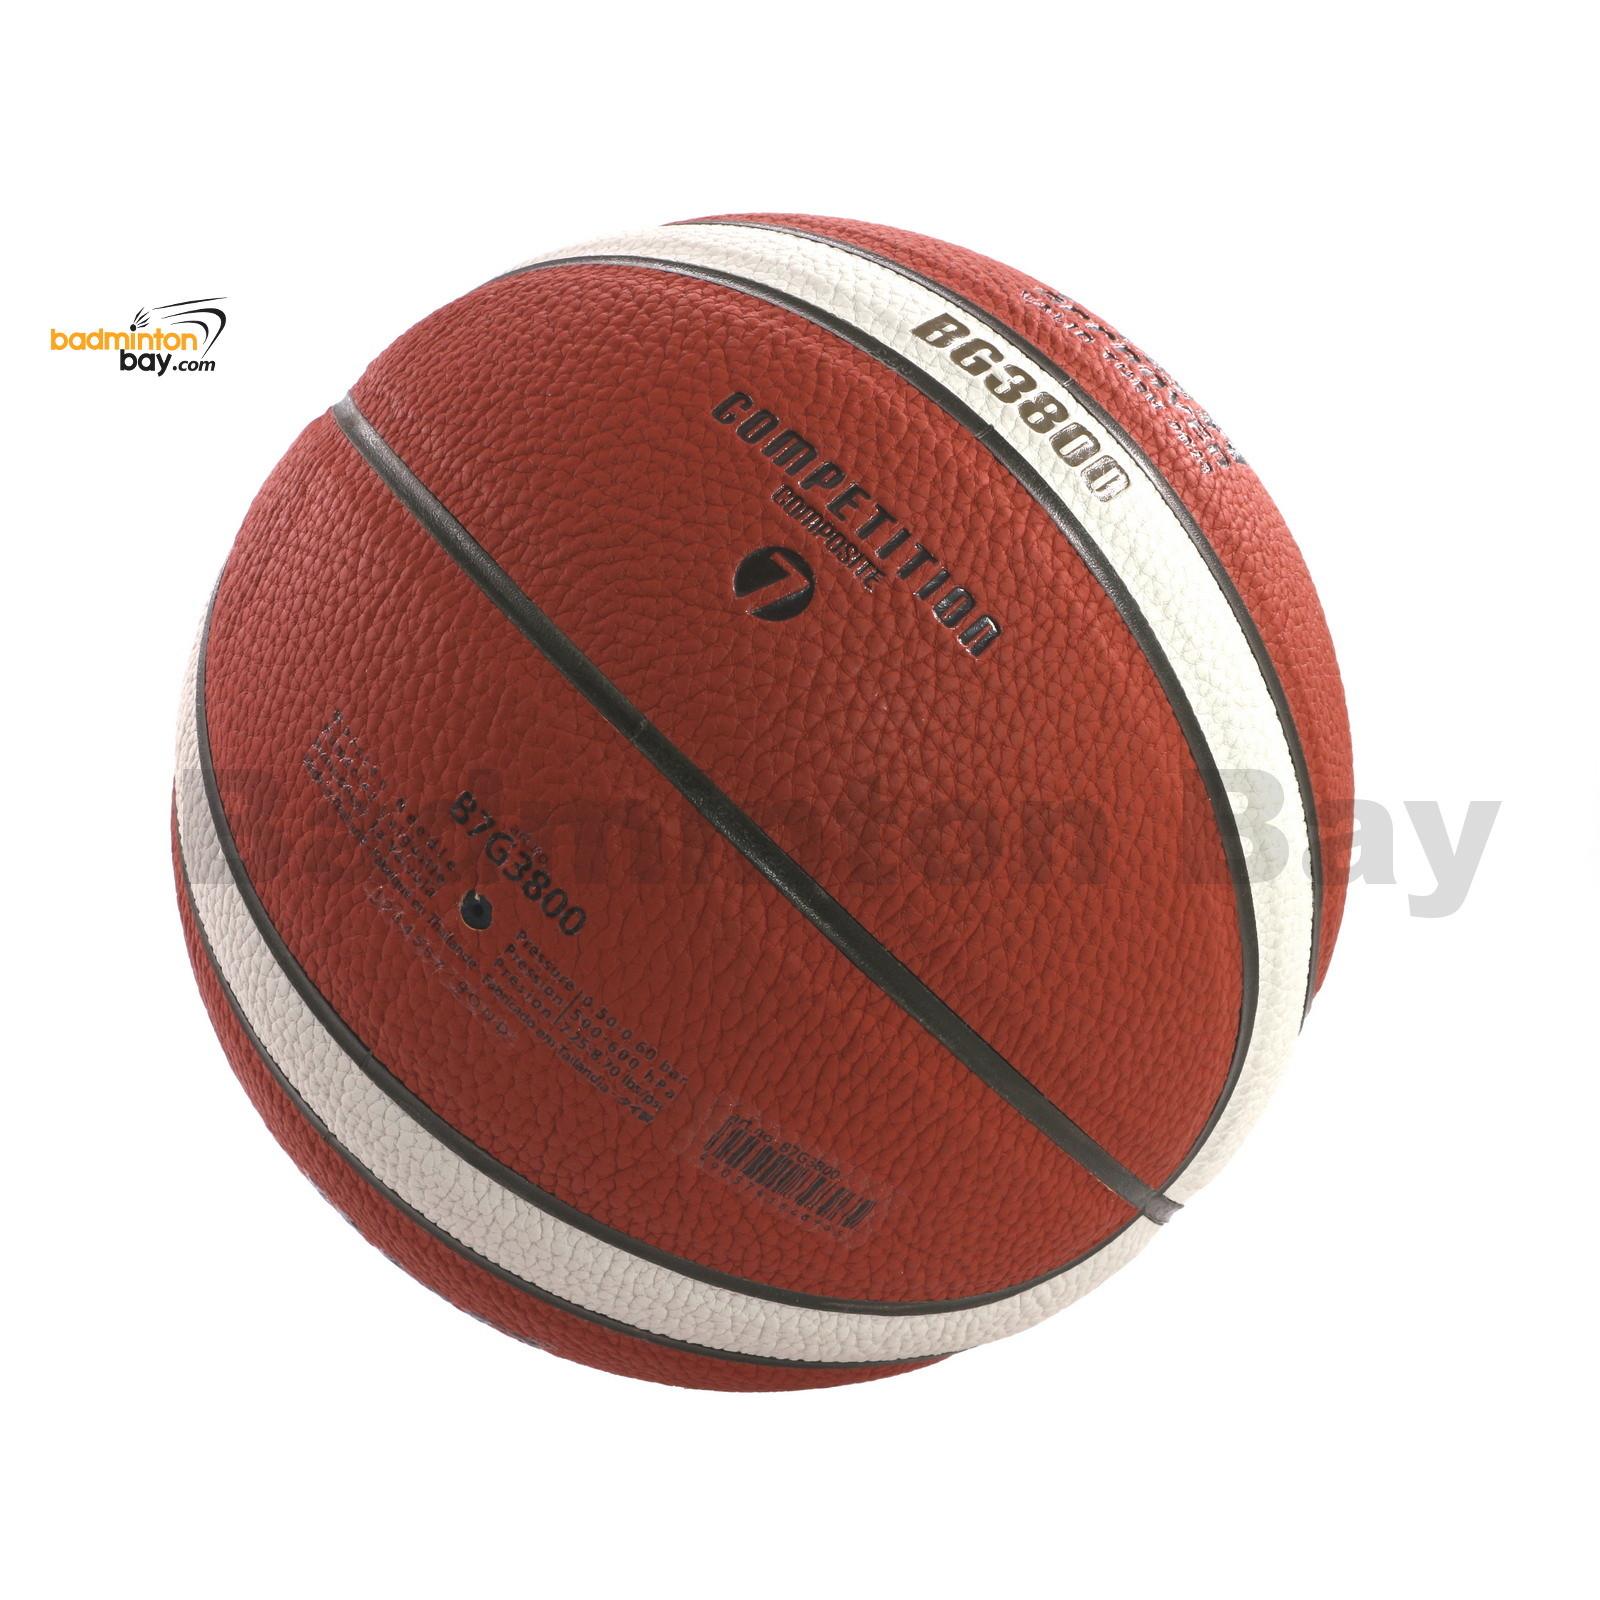 Molten B7G3800 Basketball Comp Leather FIBA Size 7-29.5 BG3800 Series GM7X 